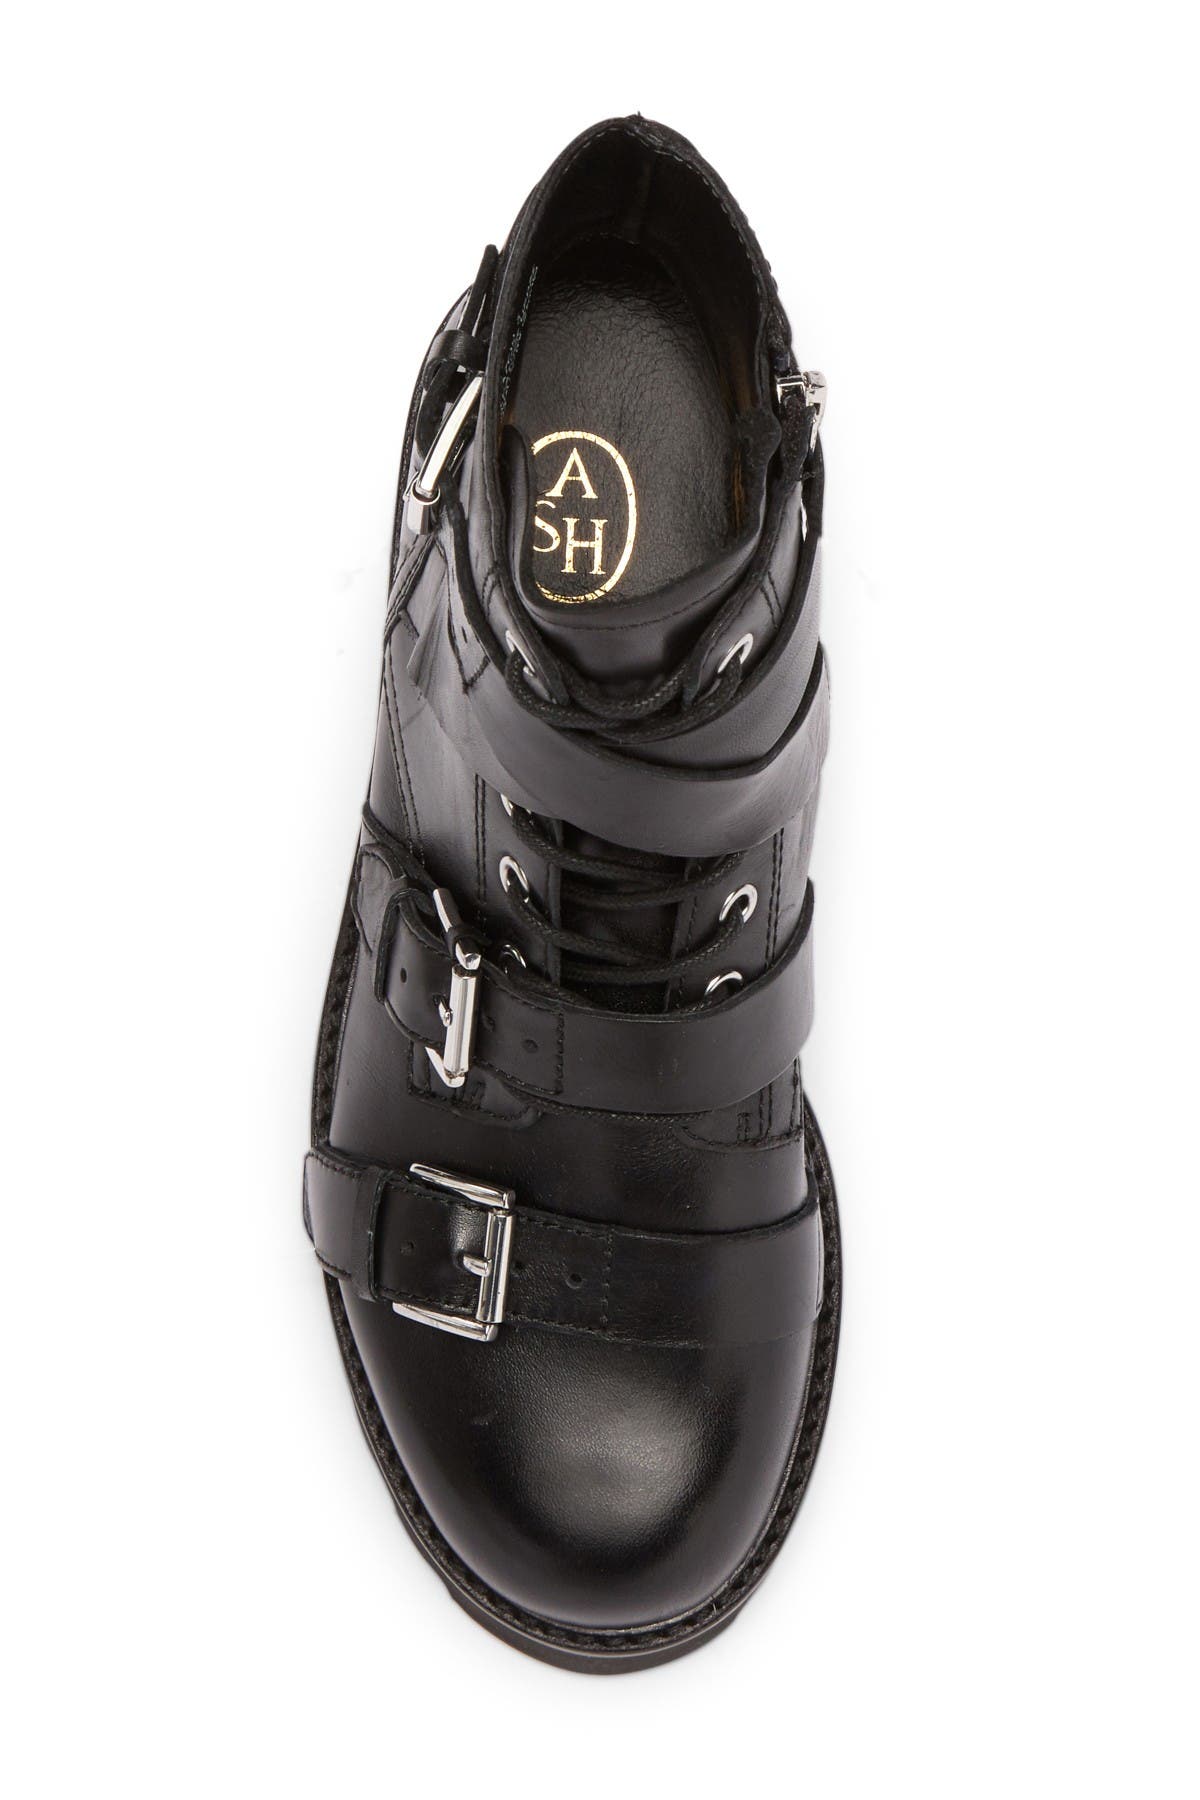 ash razor black leather boot